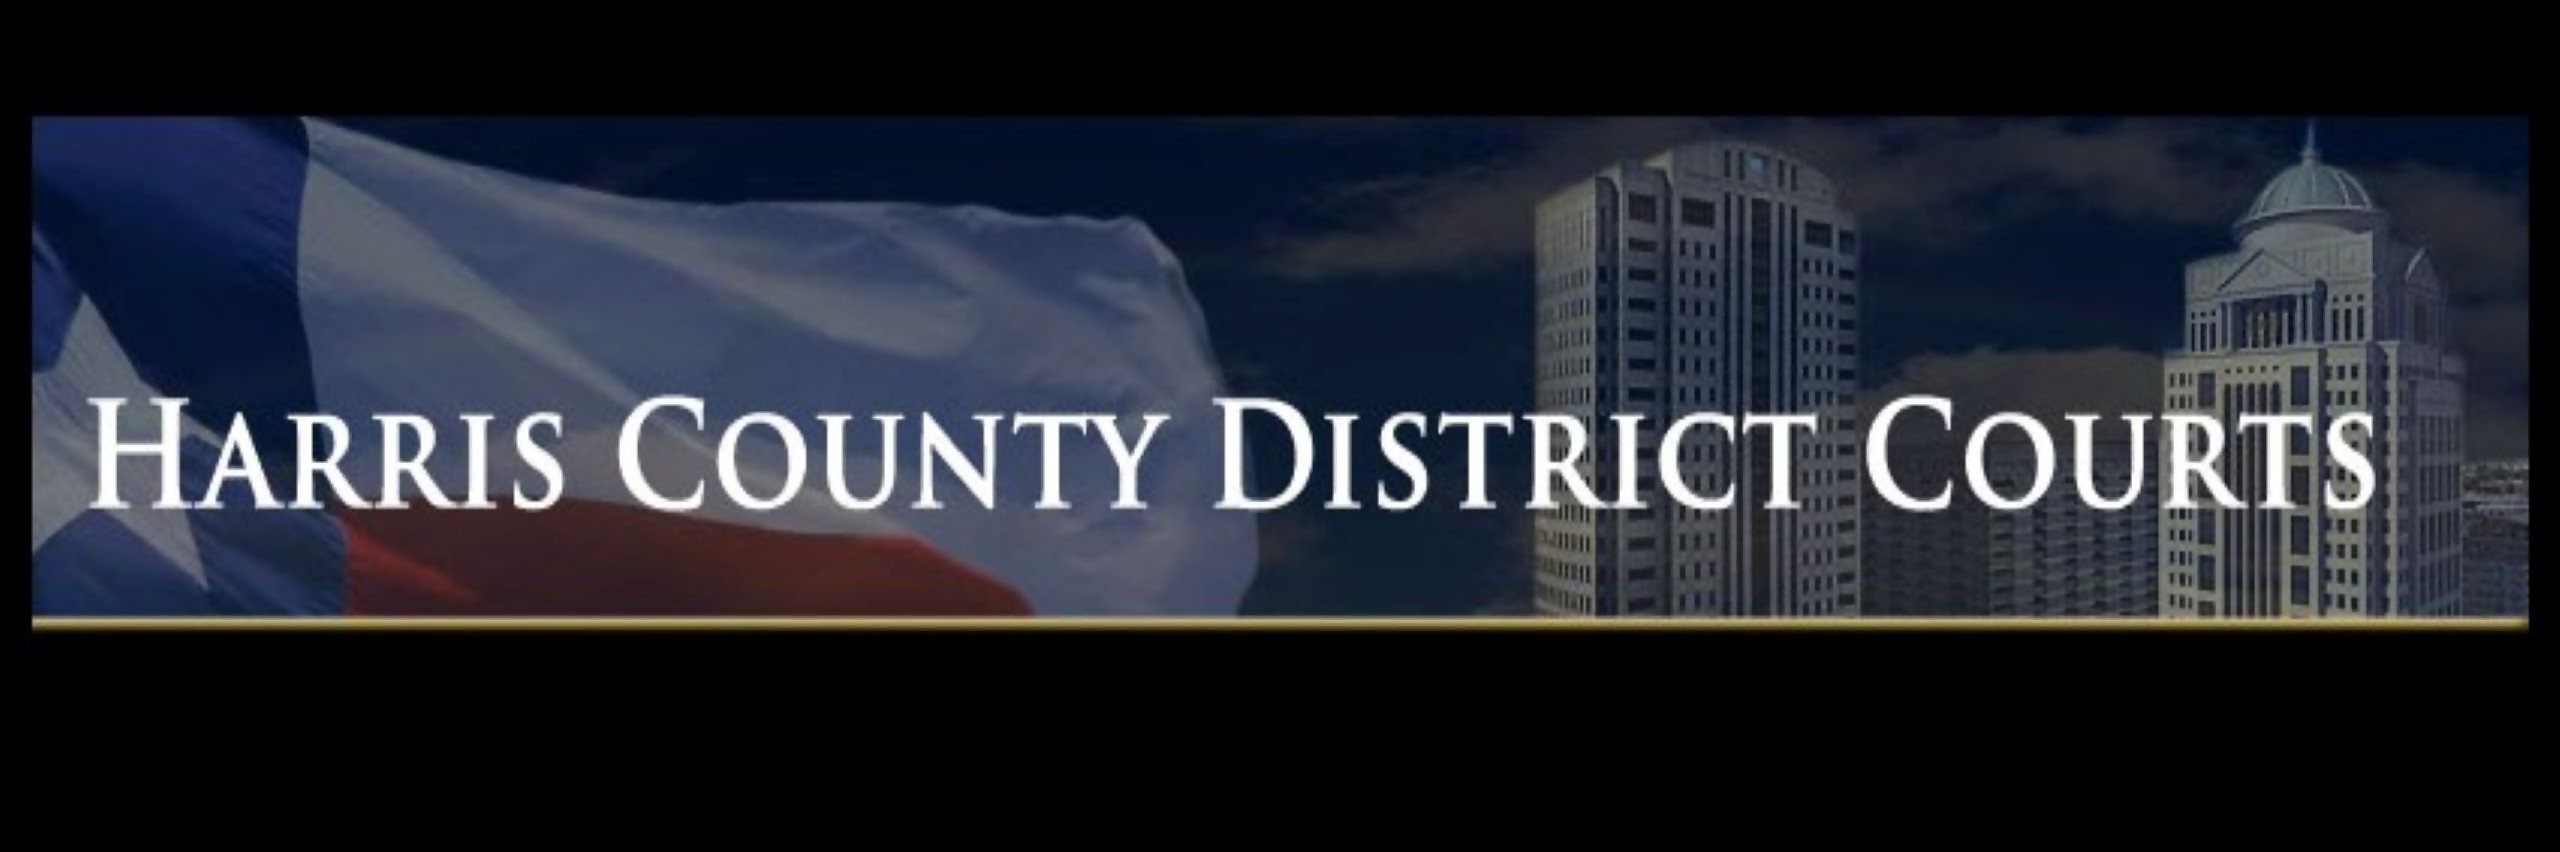 246th District Court - Live Stream